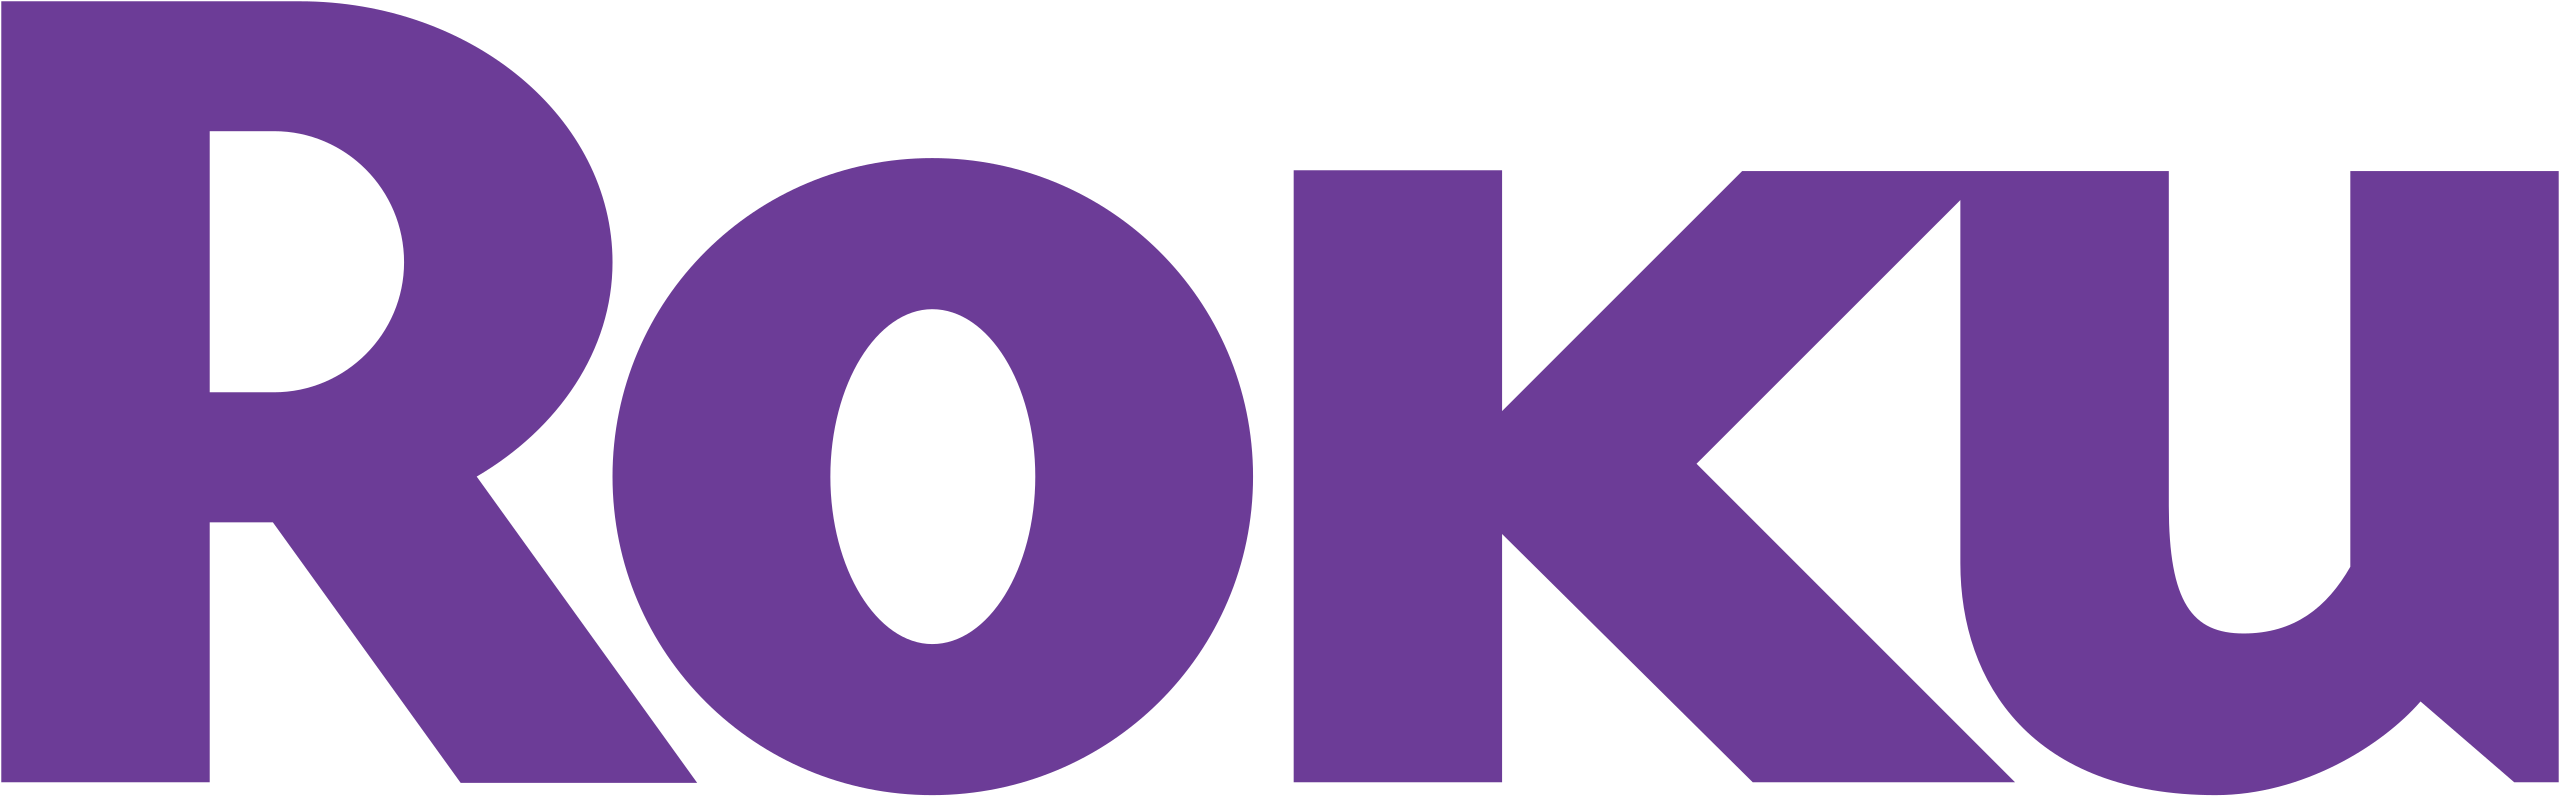 2560px-Roku_logo